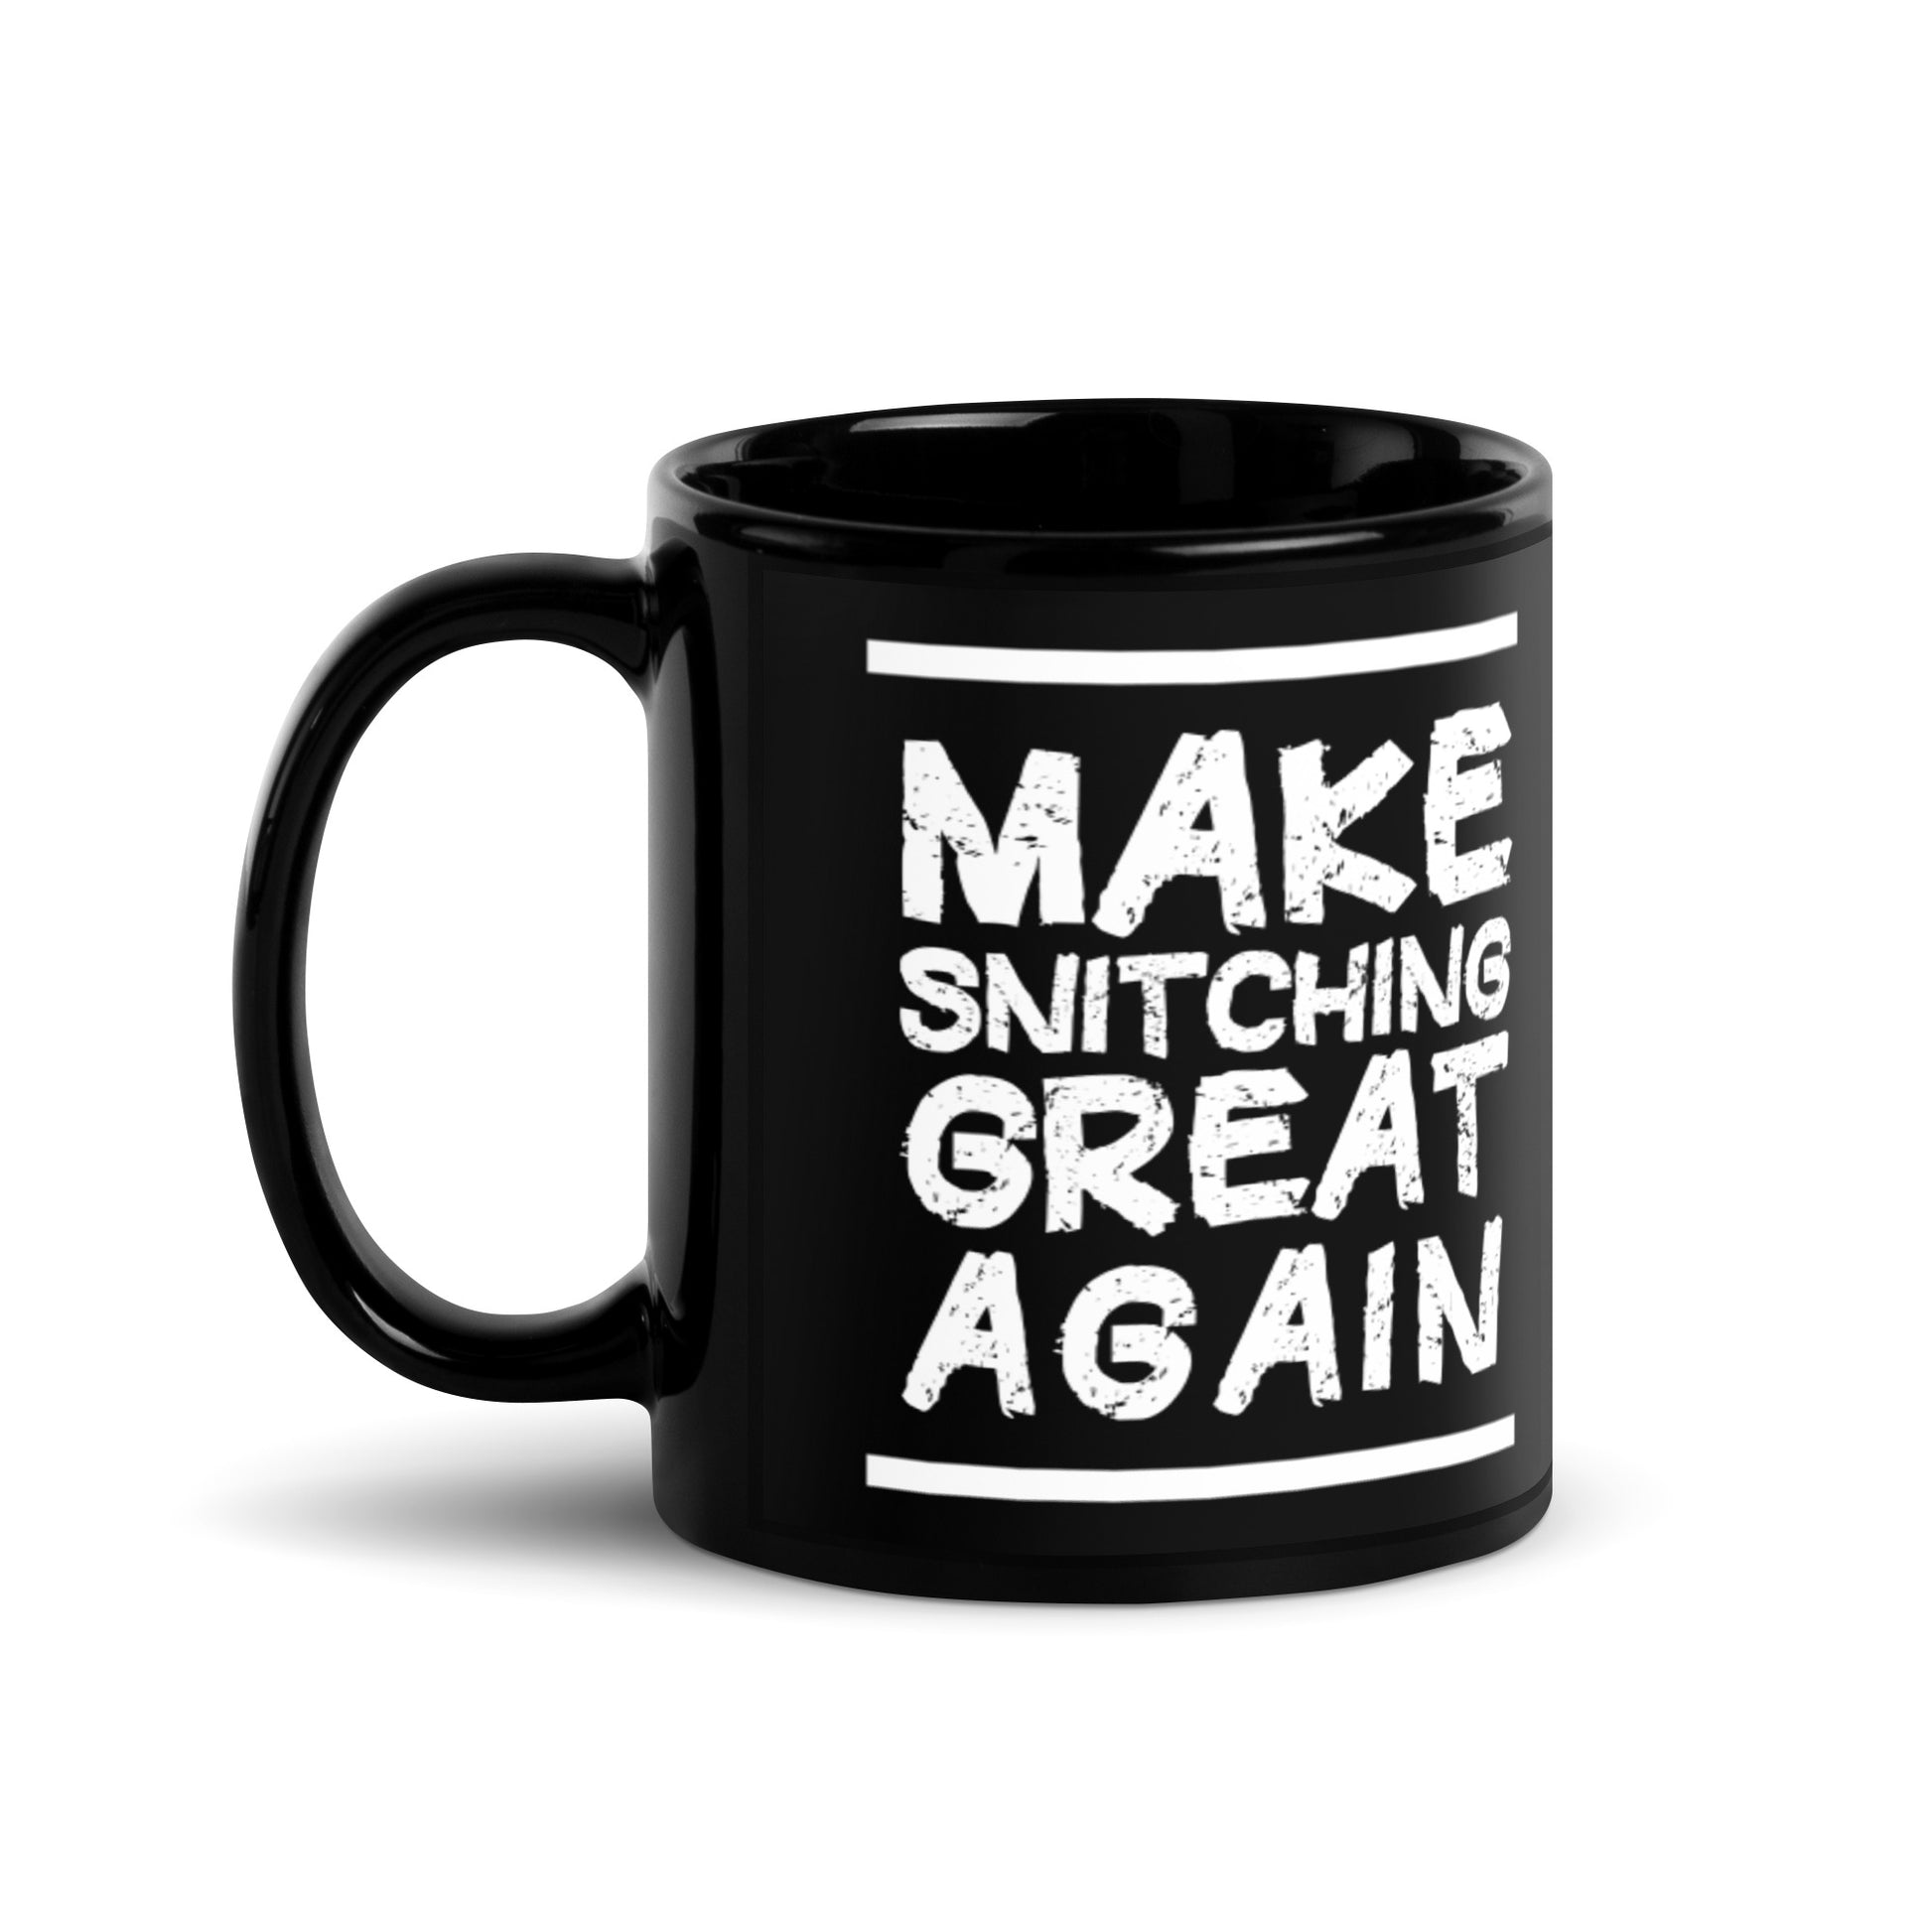 Make Snitching Great Again Motto Black Mug - Make Snitching Great Again